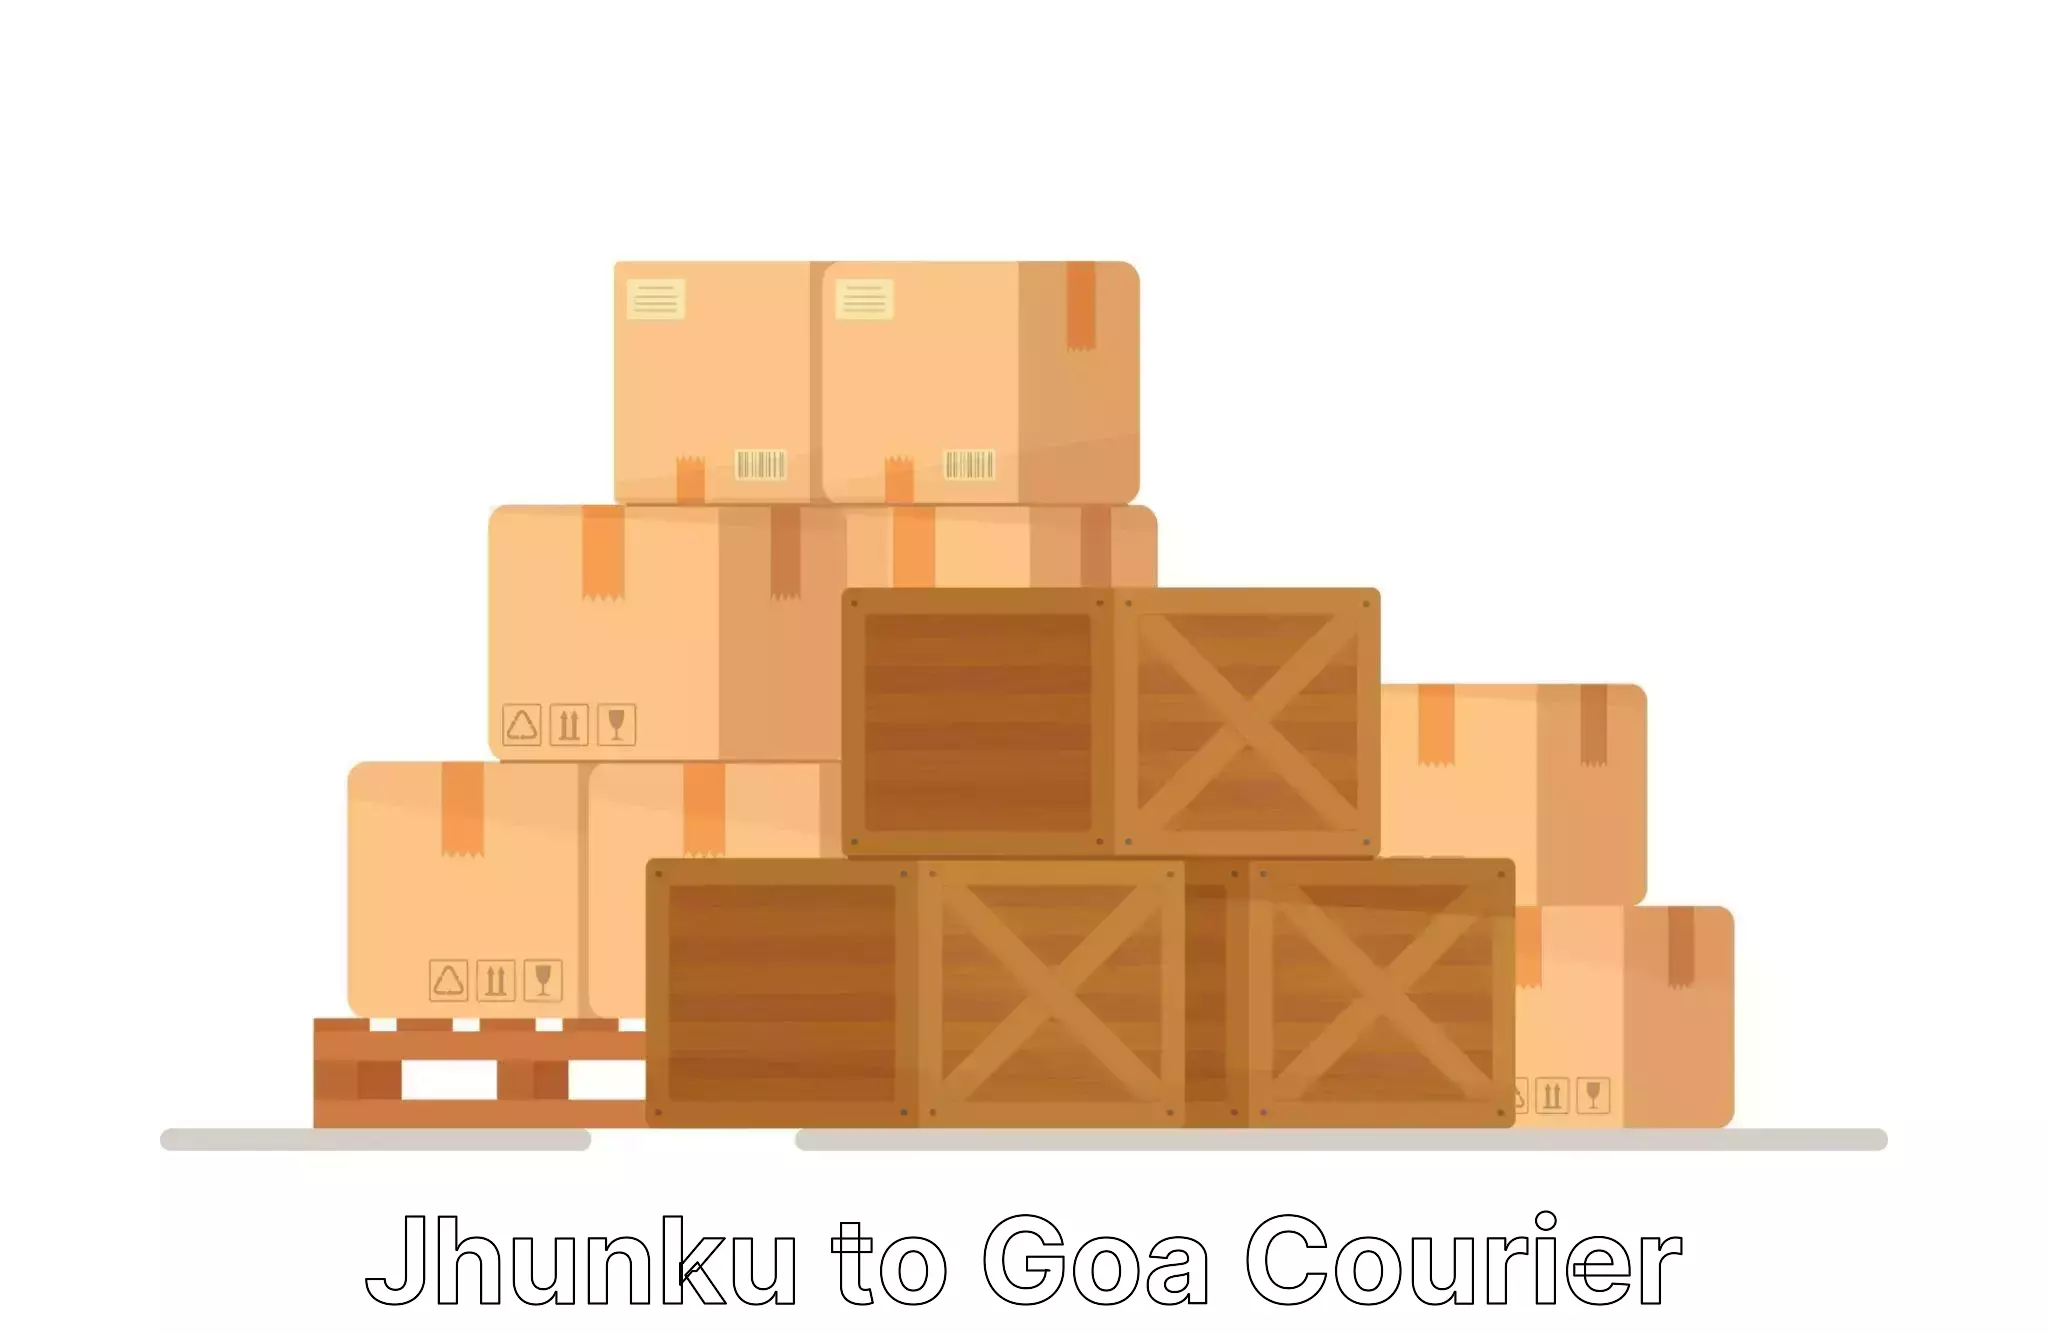 Quality relocation assistance Jhunku to Goa